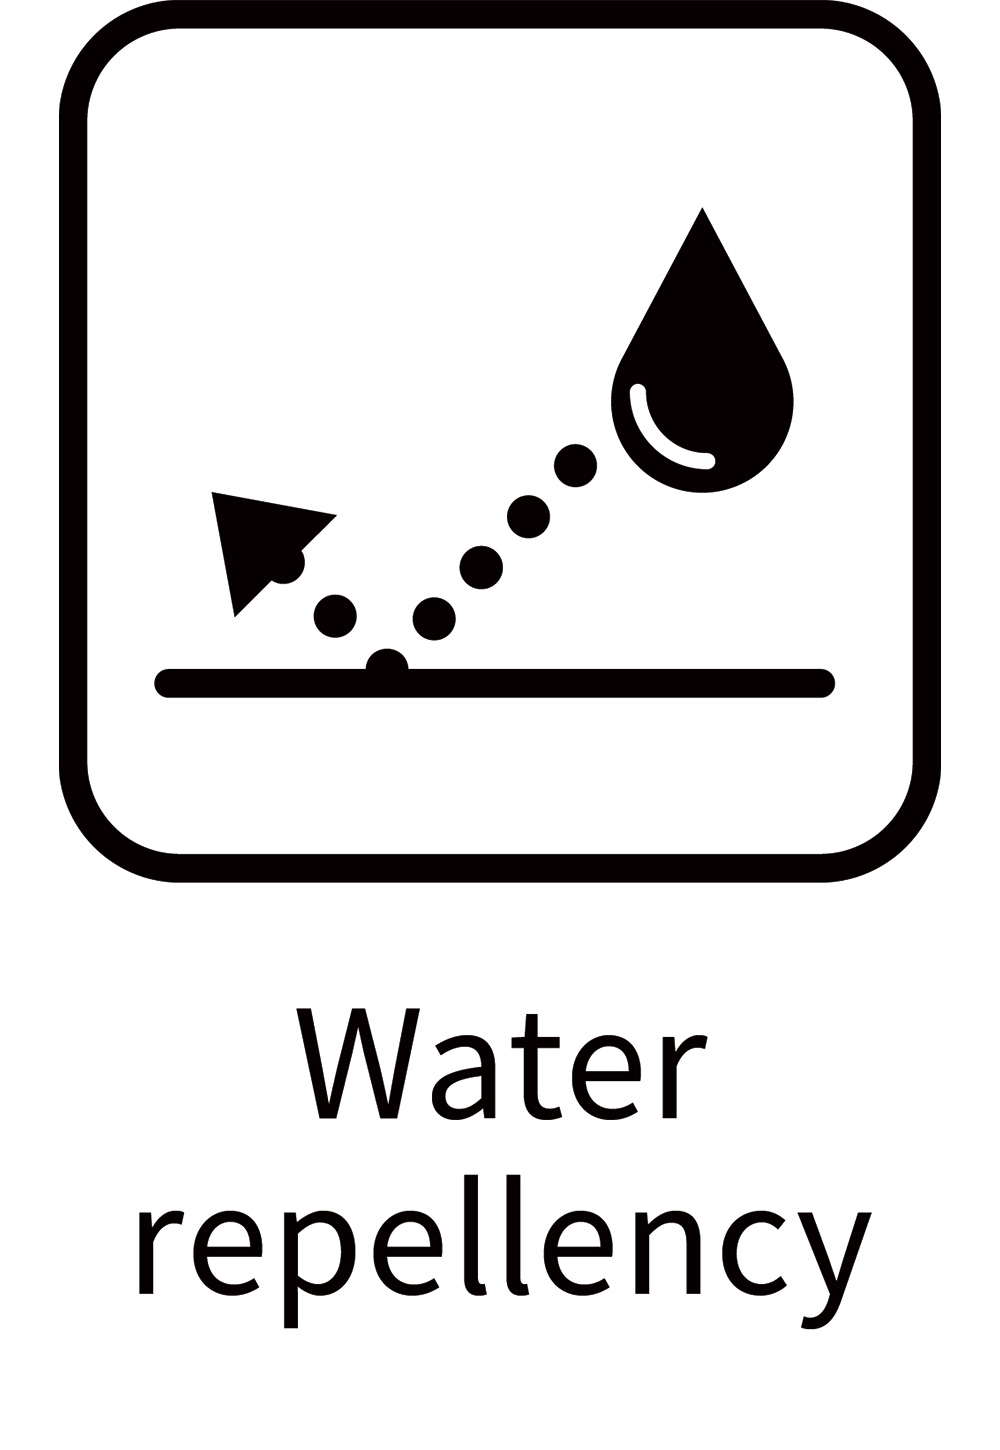 Water repellency